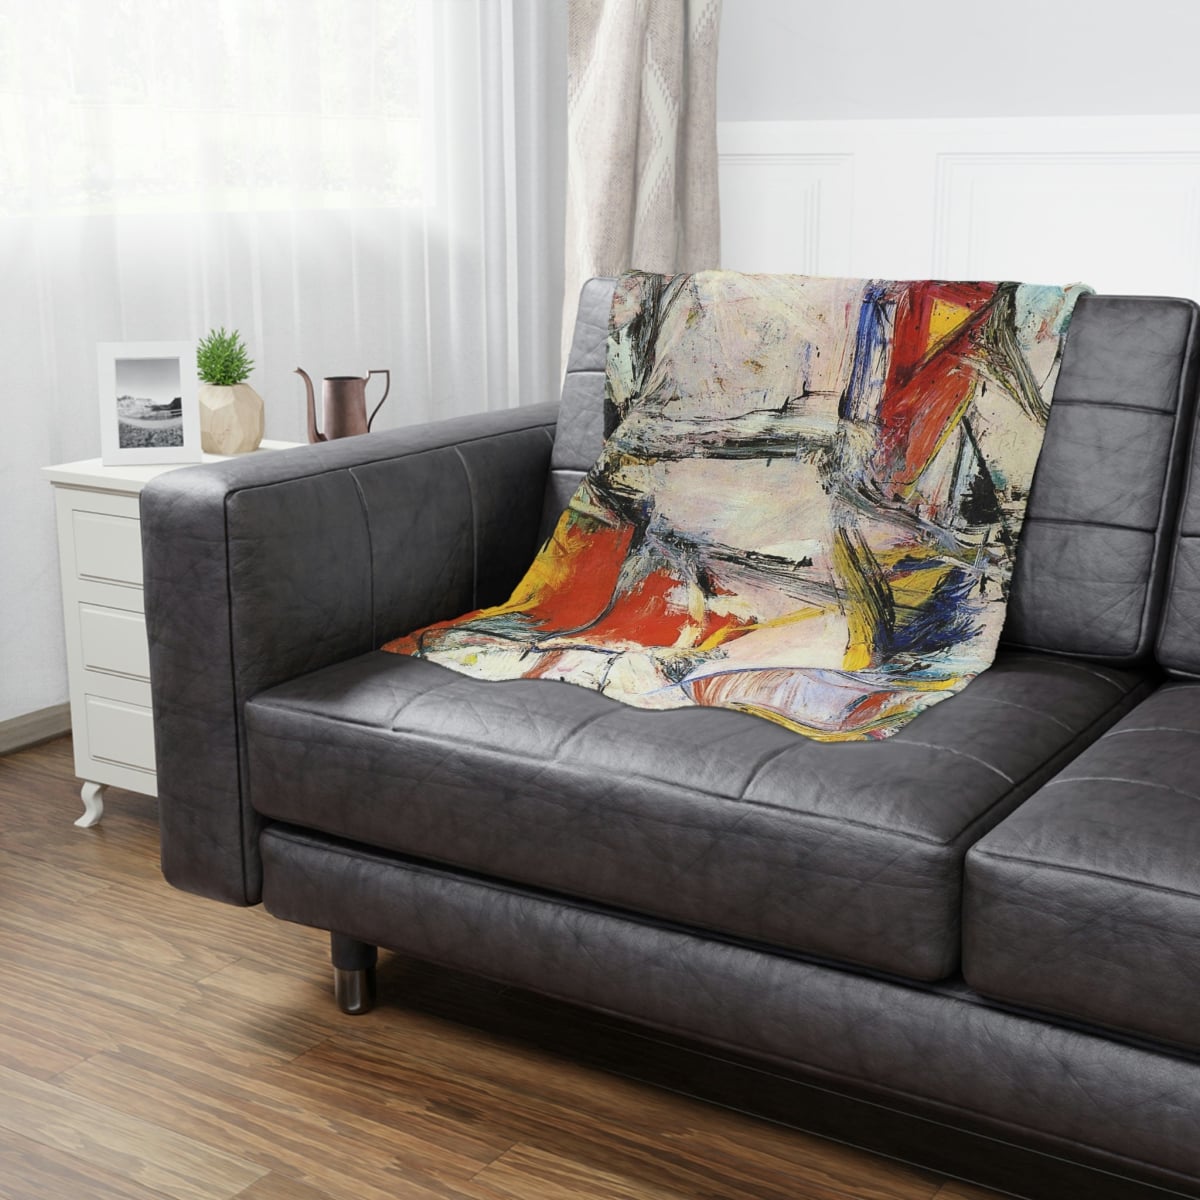 Luxurious Interchange Collection Blanket - Home Decor